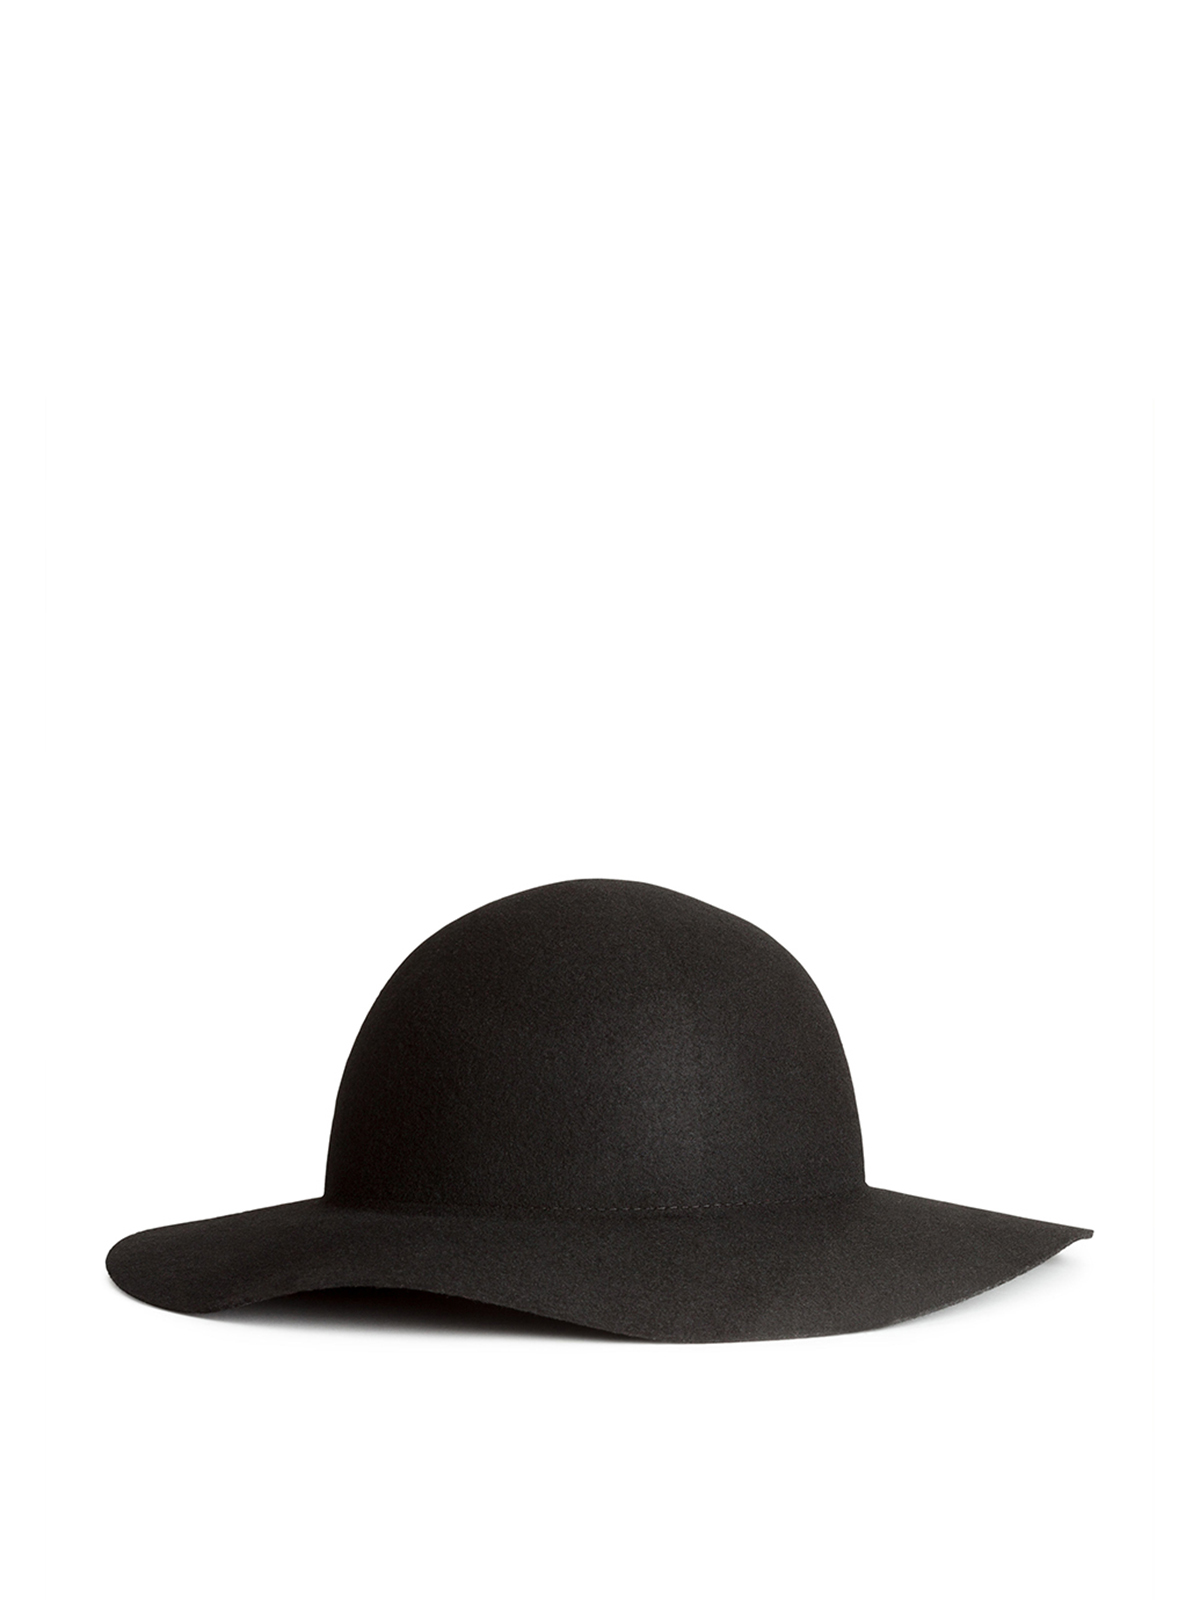 H hat. Шляпа HM женская фетровая. Шляпа HM женская черная фетровая. Шляпа h@m divided. Шляпа h&m черная.